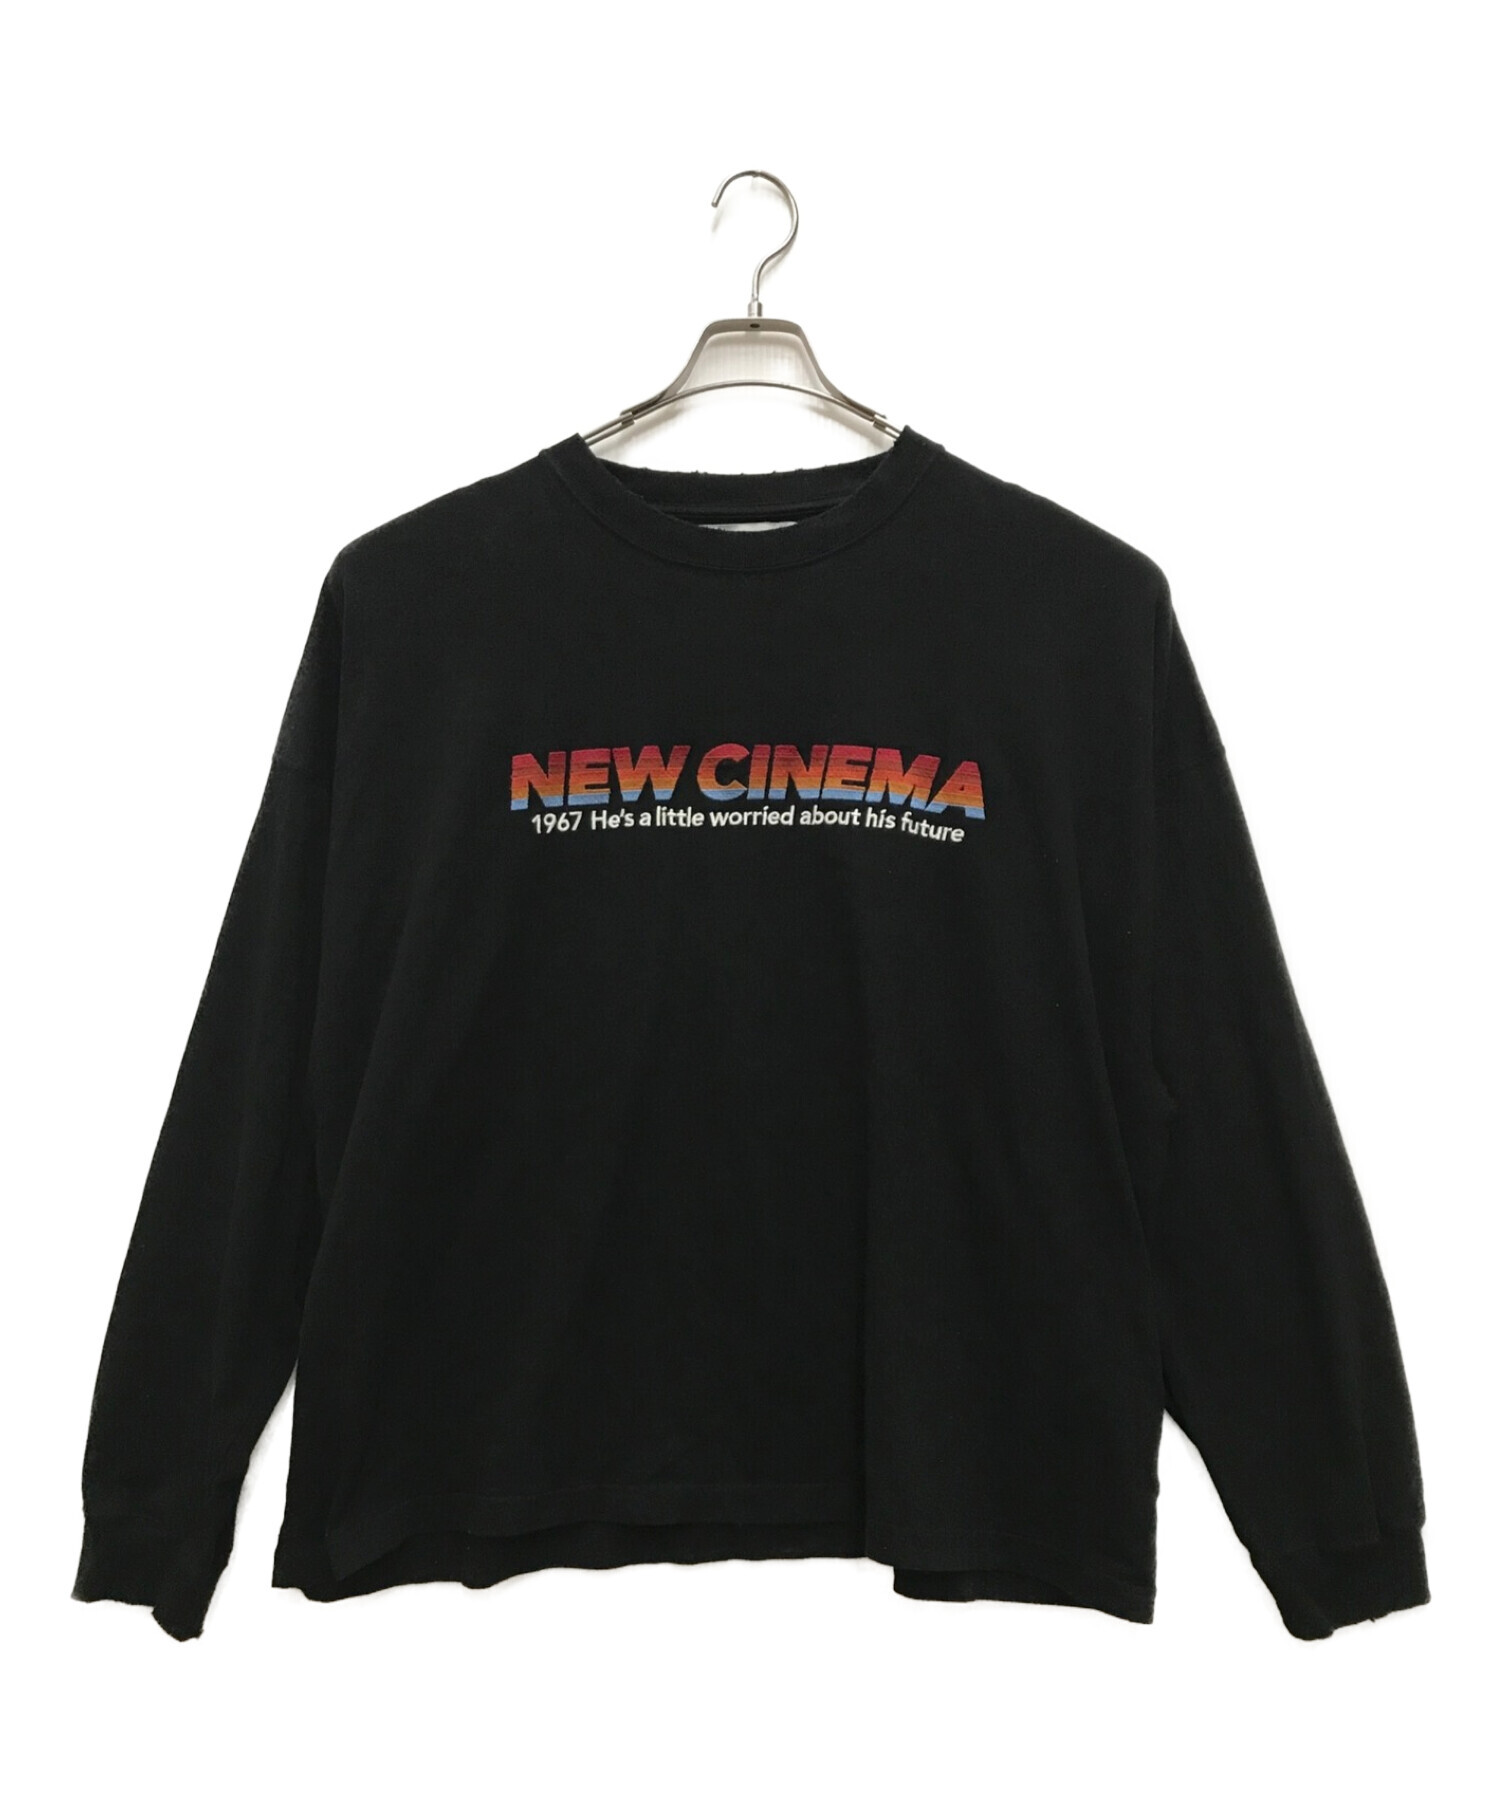 DAIRIKU (ダイリク) New Cinema Tee ブラック サイズ:F